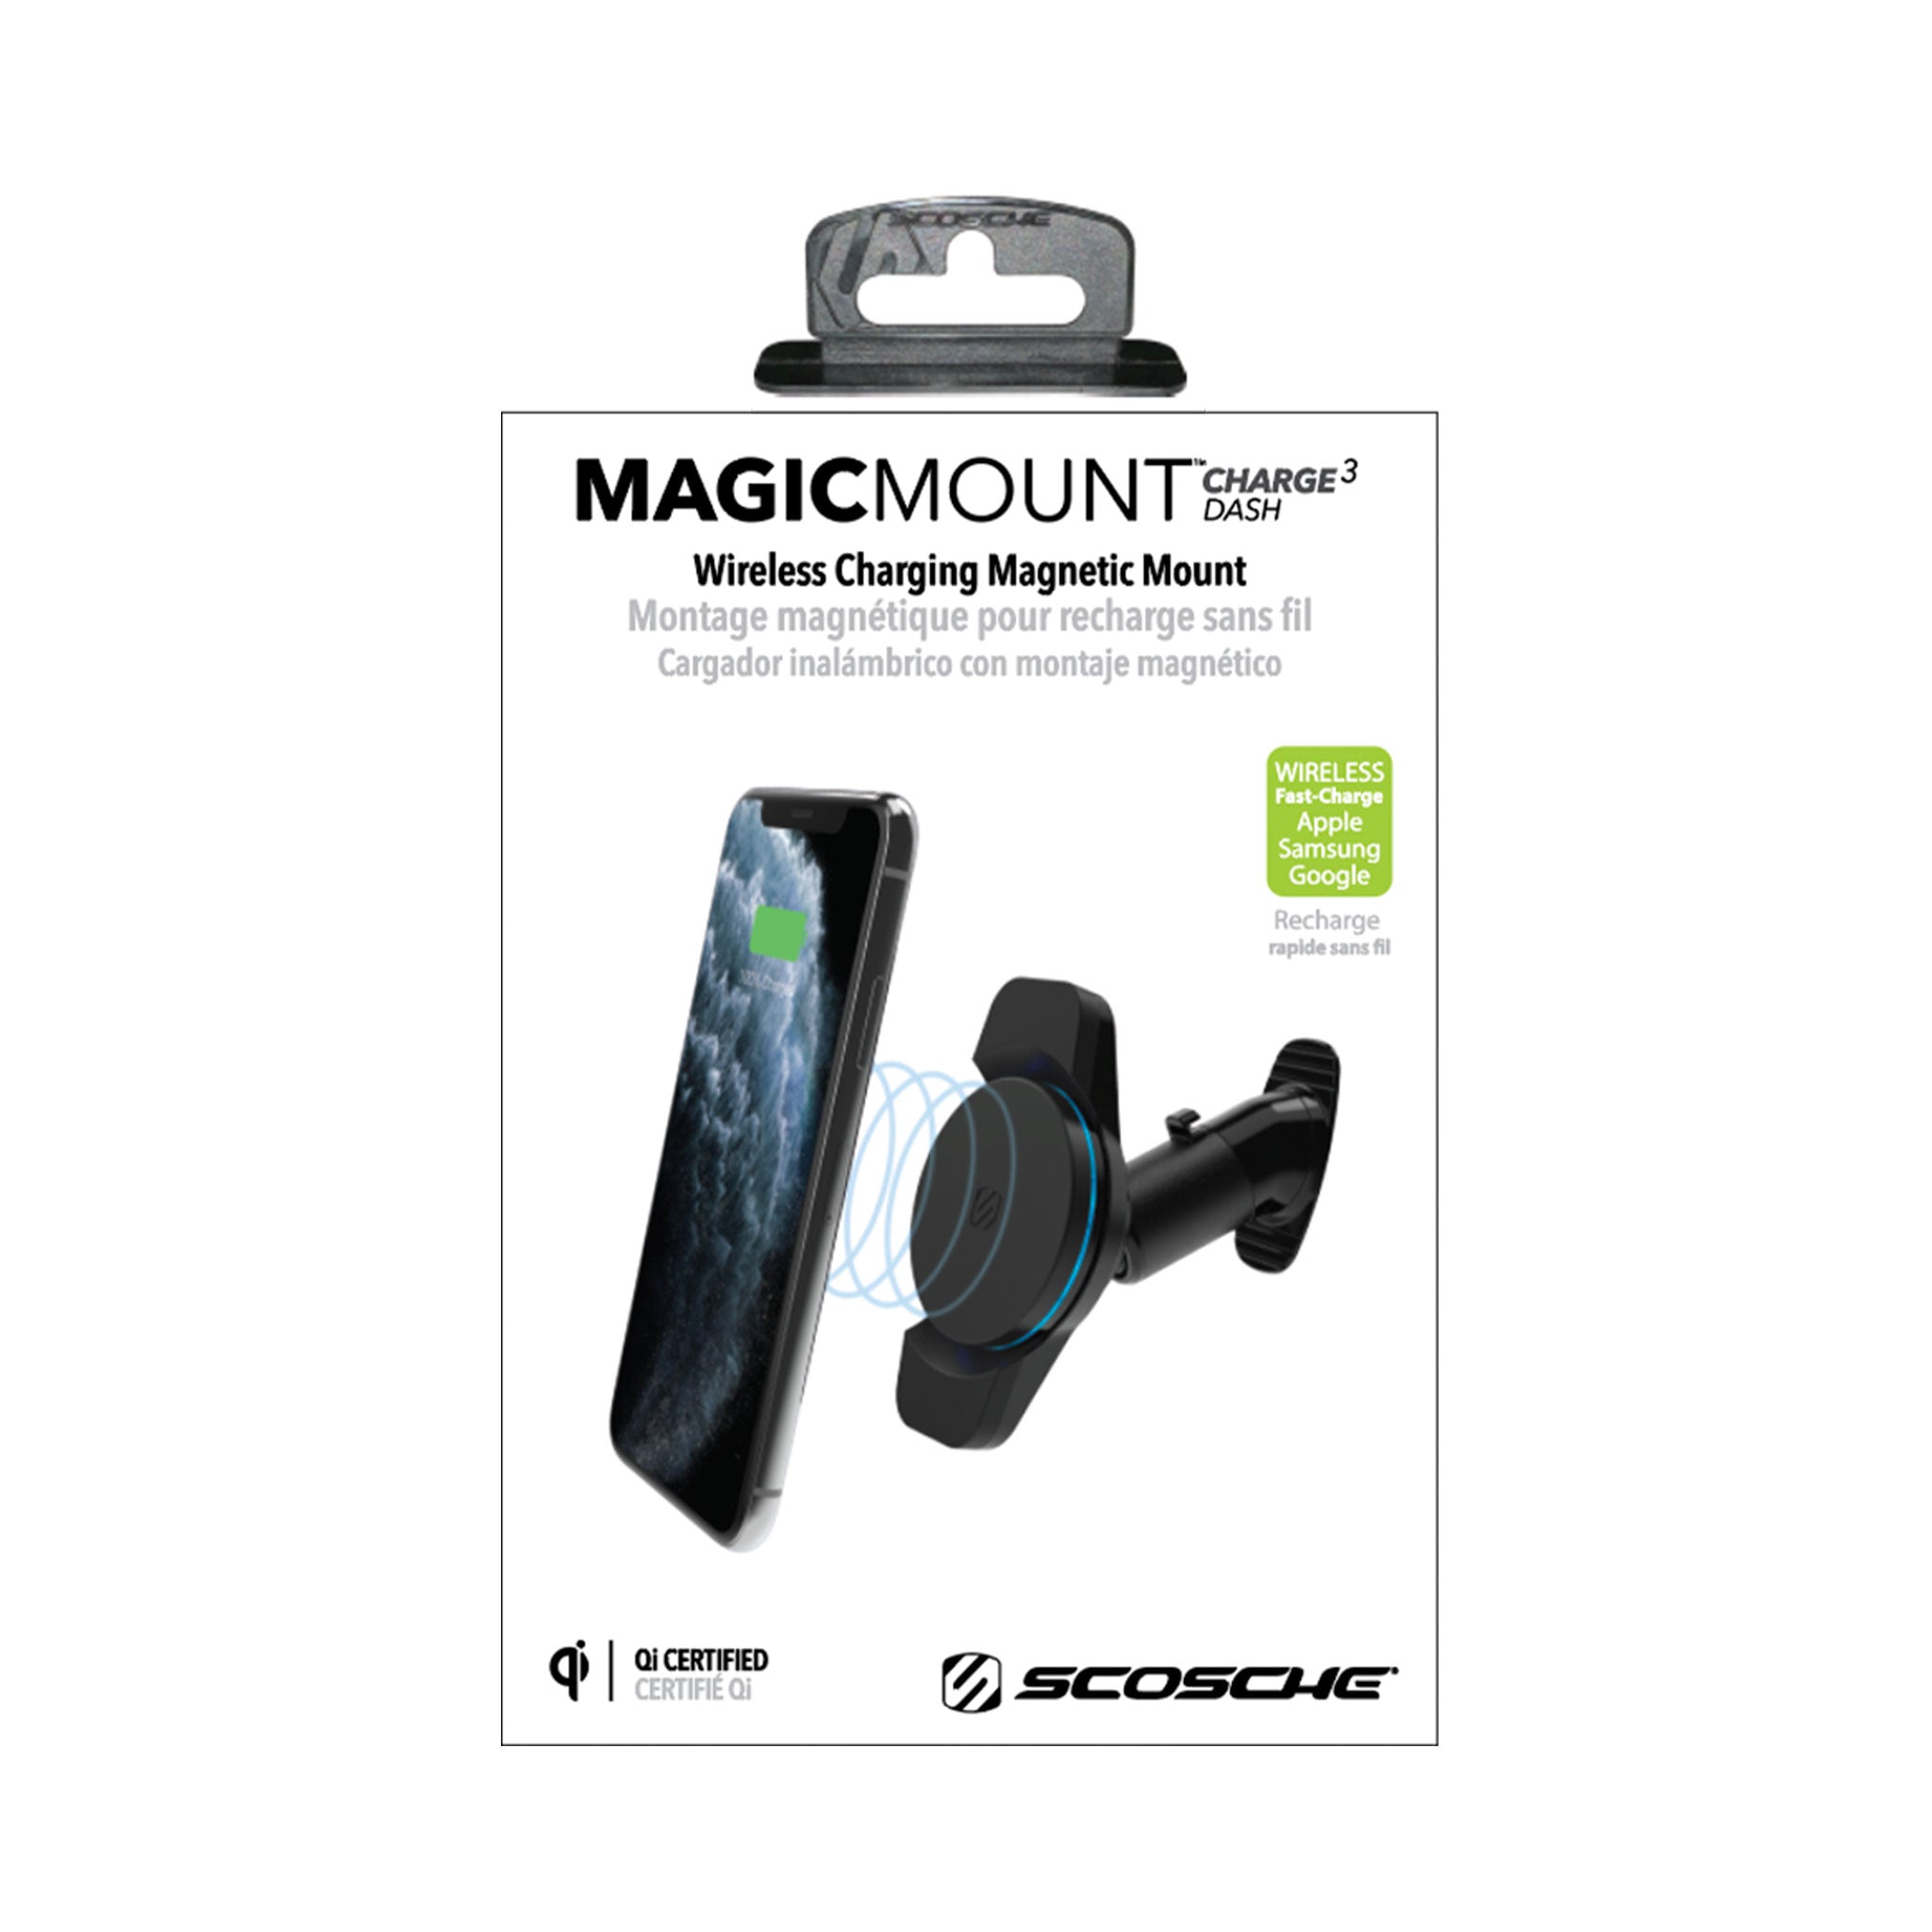 Scosche - Magicmount Charge3 Wireless Charging Dash Mount 10w - Black